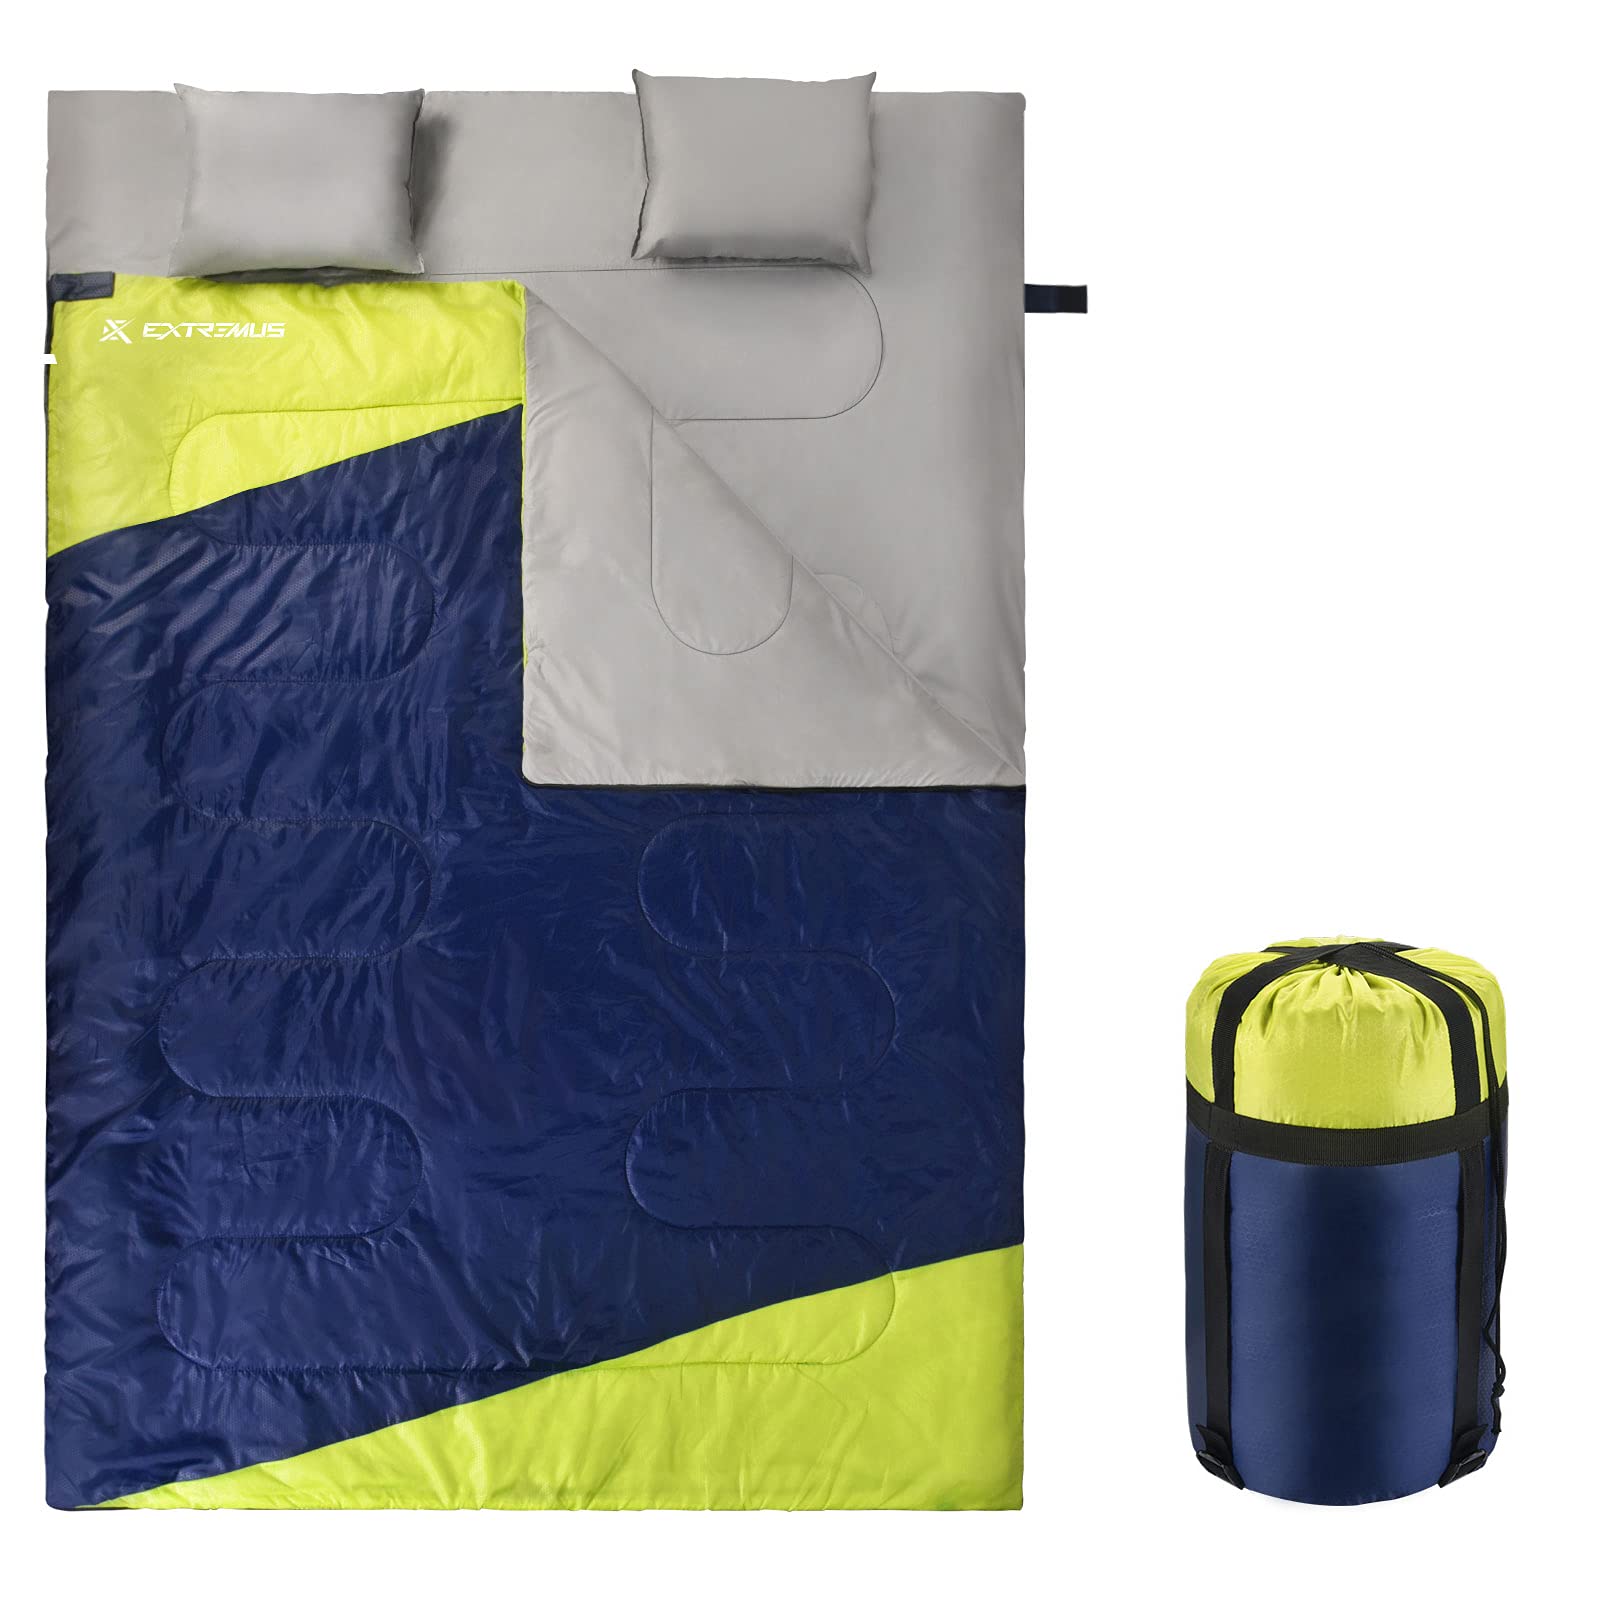 Extremus Cascade Sleeping Bags ⋆ OutdoorFull.com